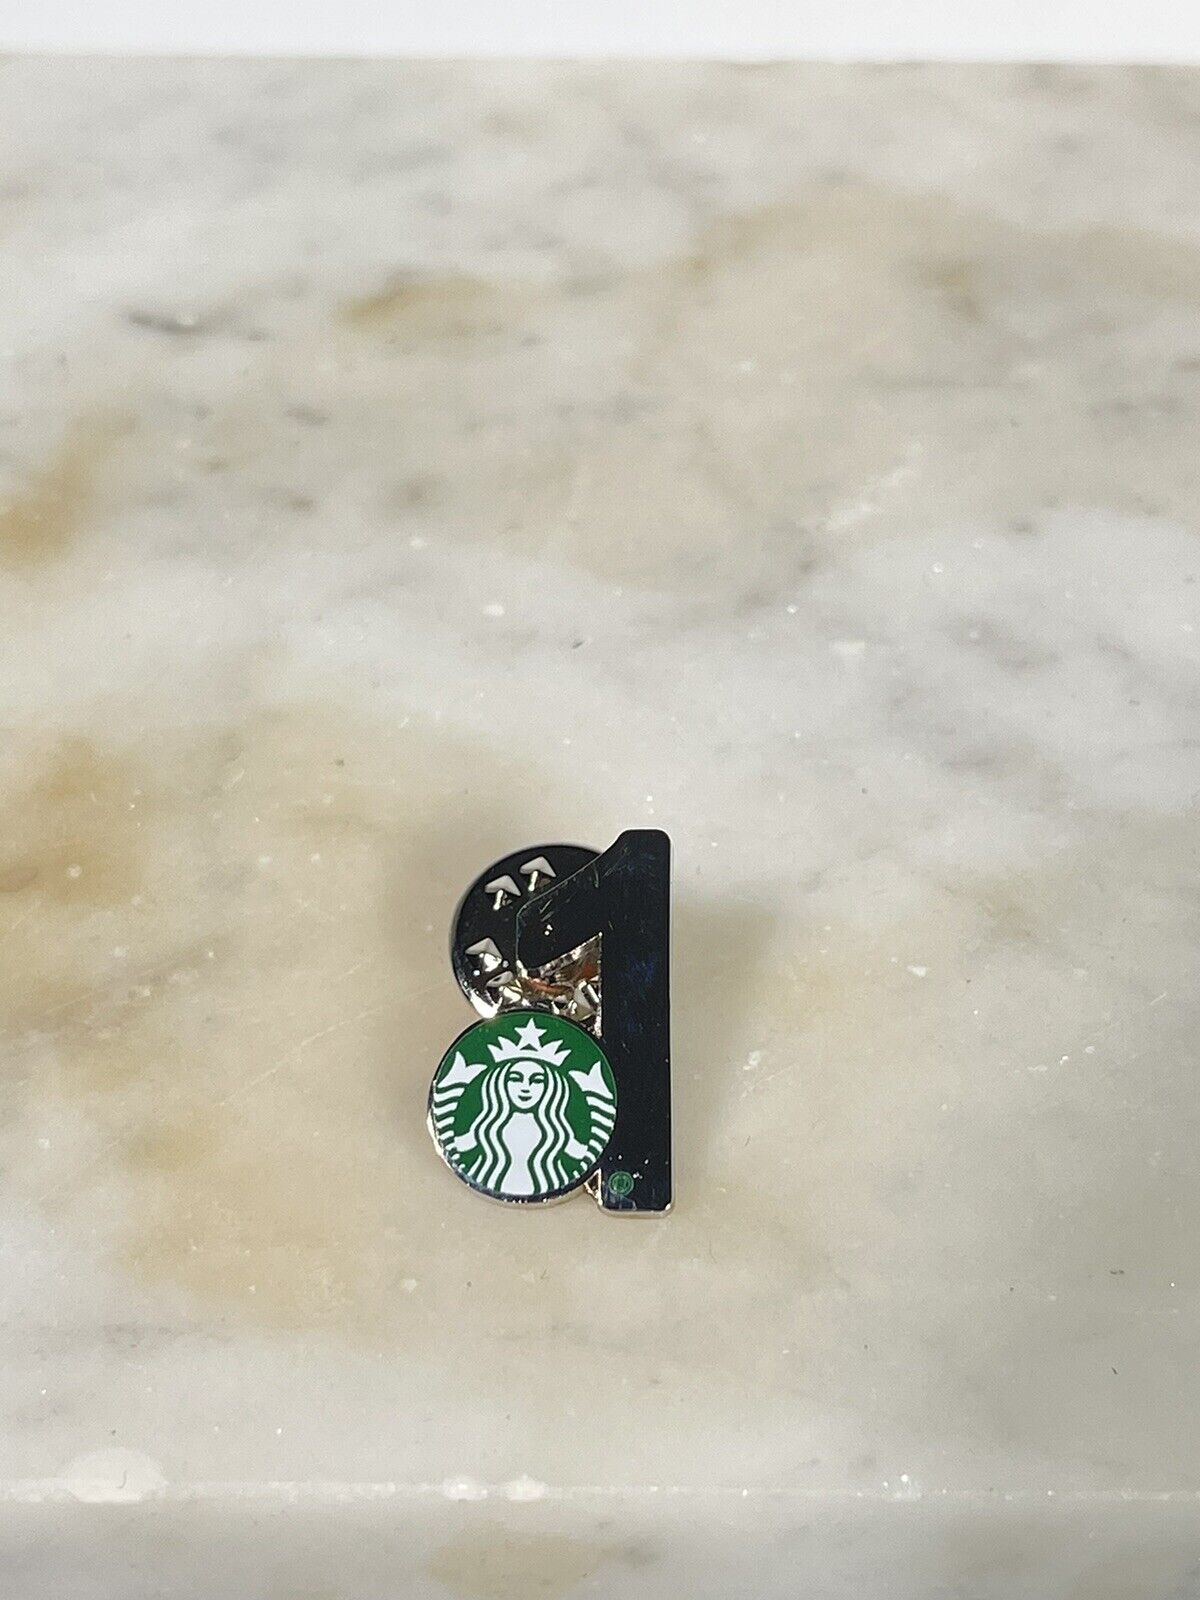 Starbucks Limited Edition 1 Year Anniversary Barista Pin 